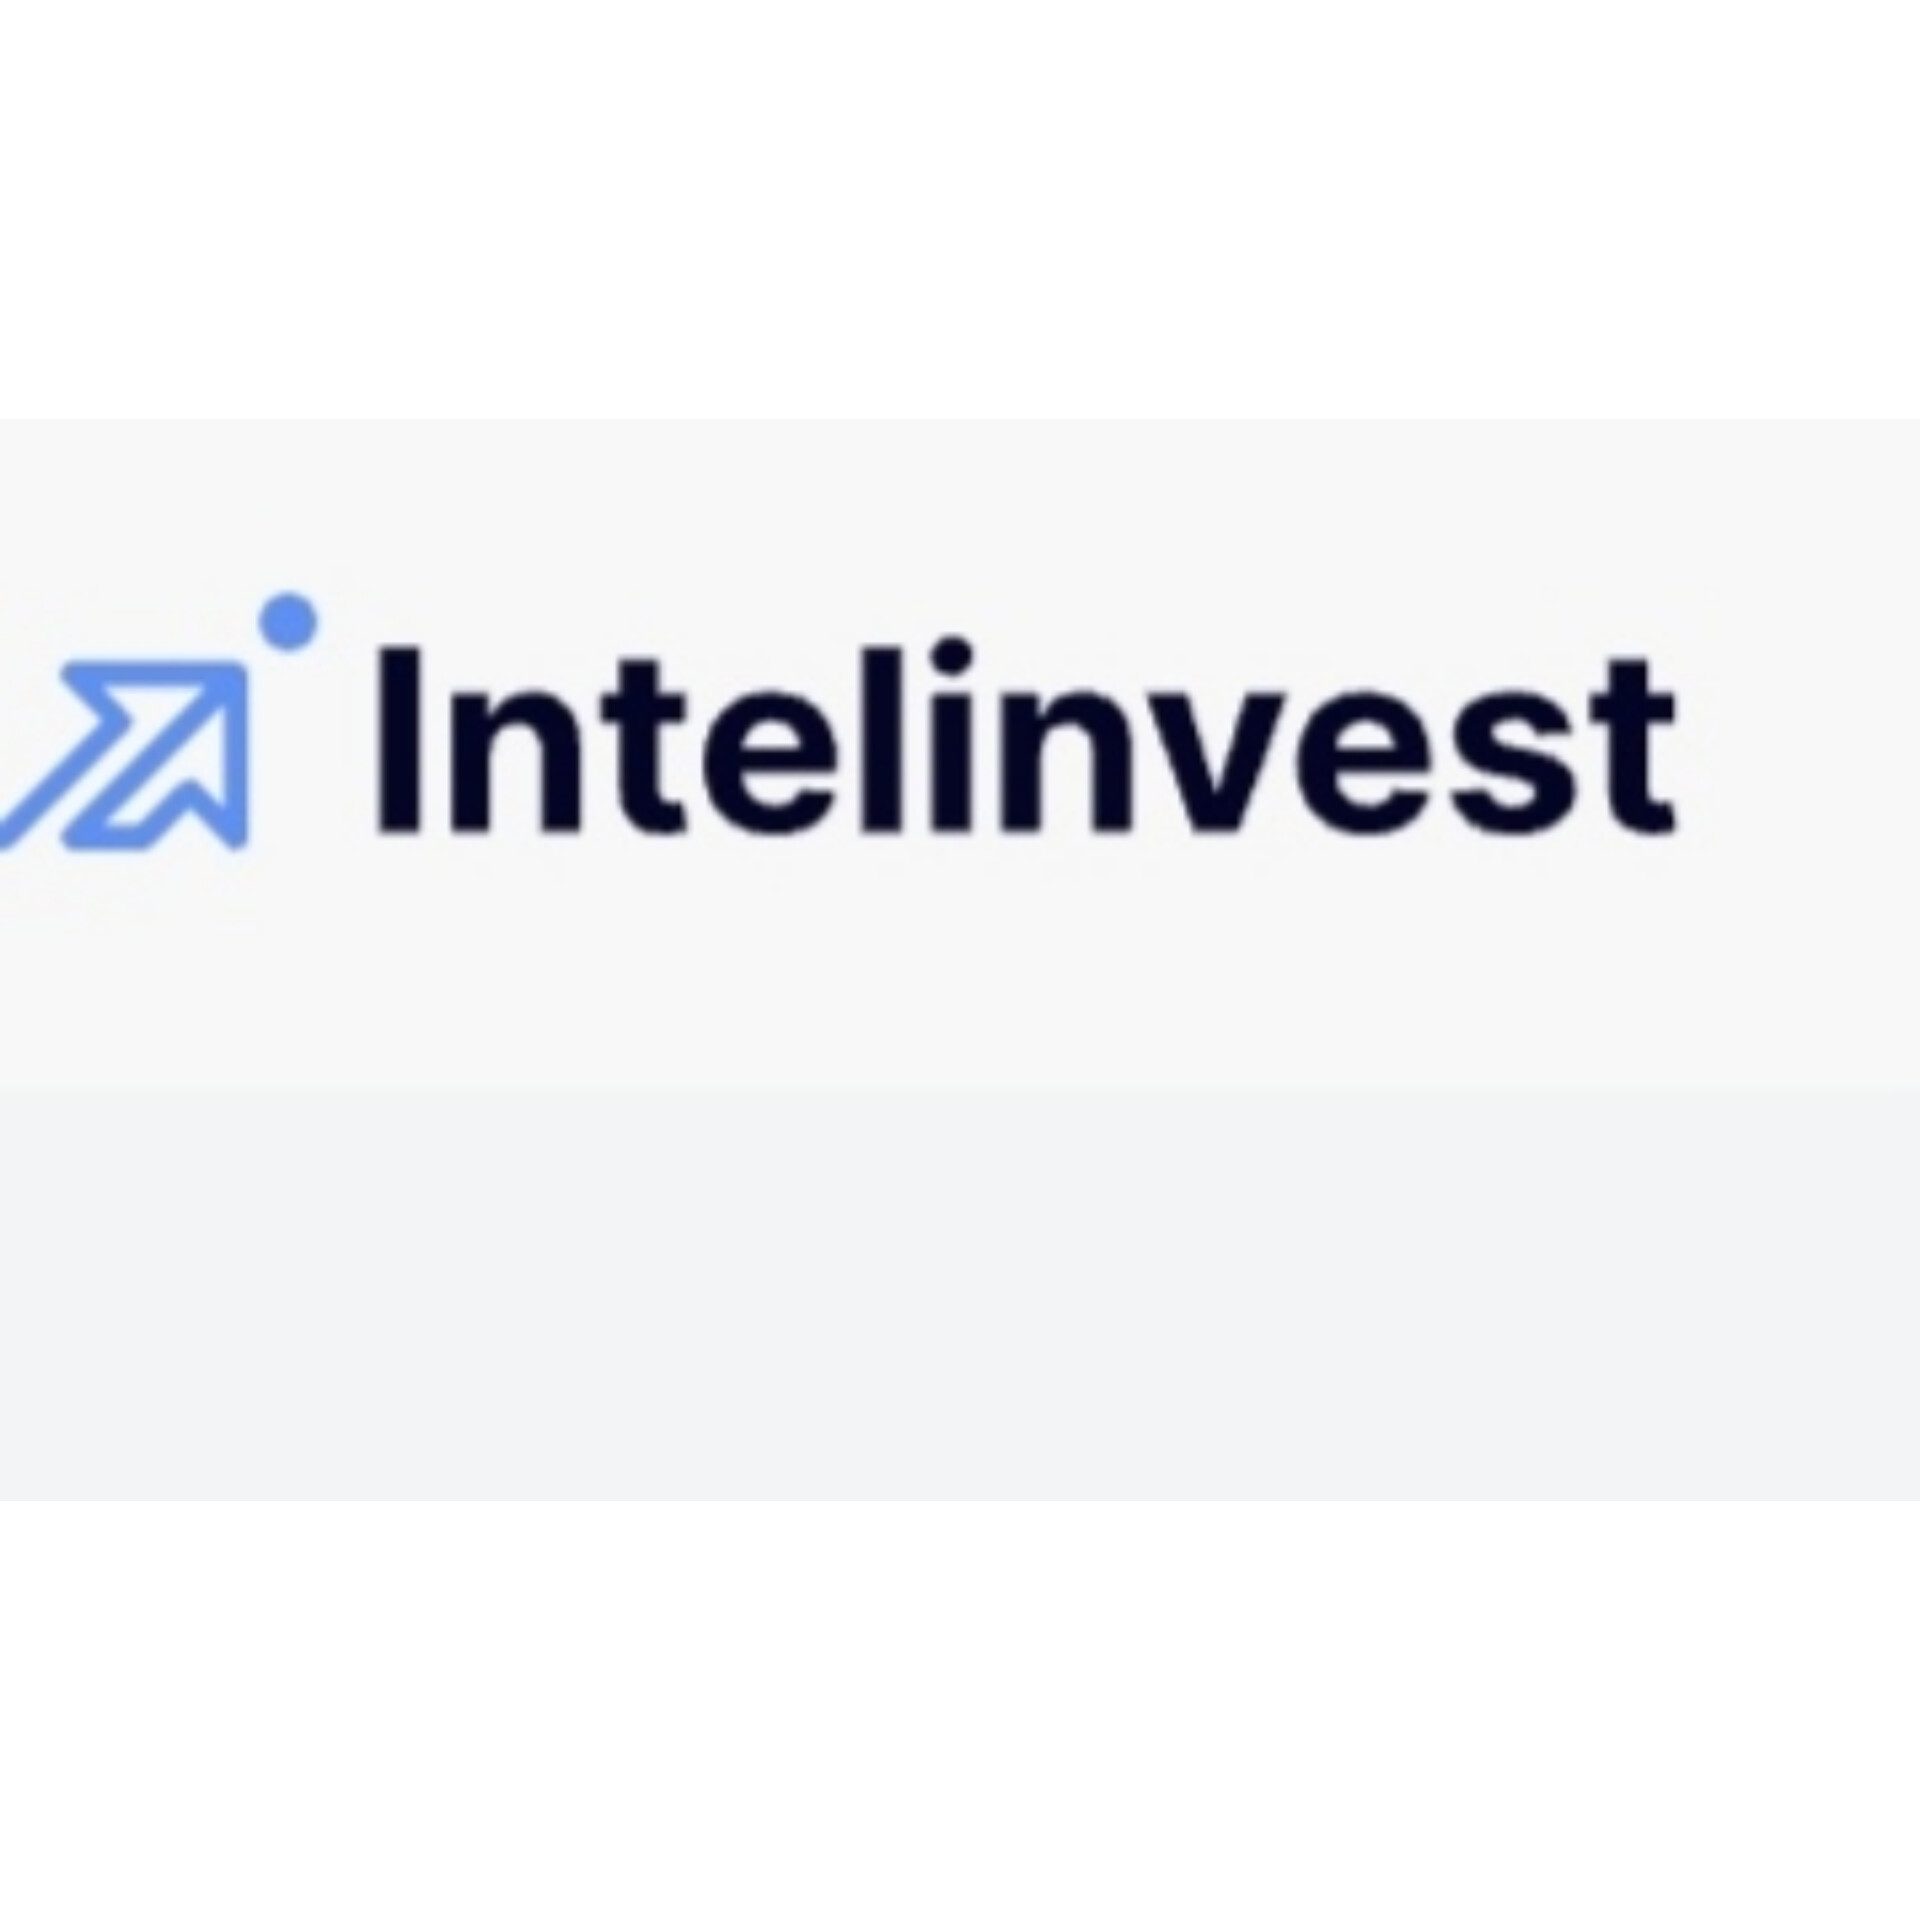 Intelinvest